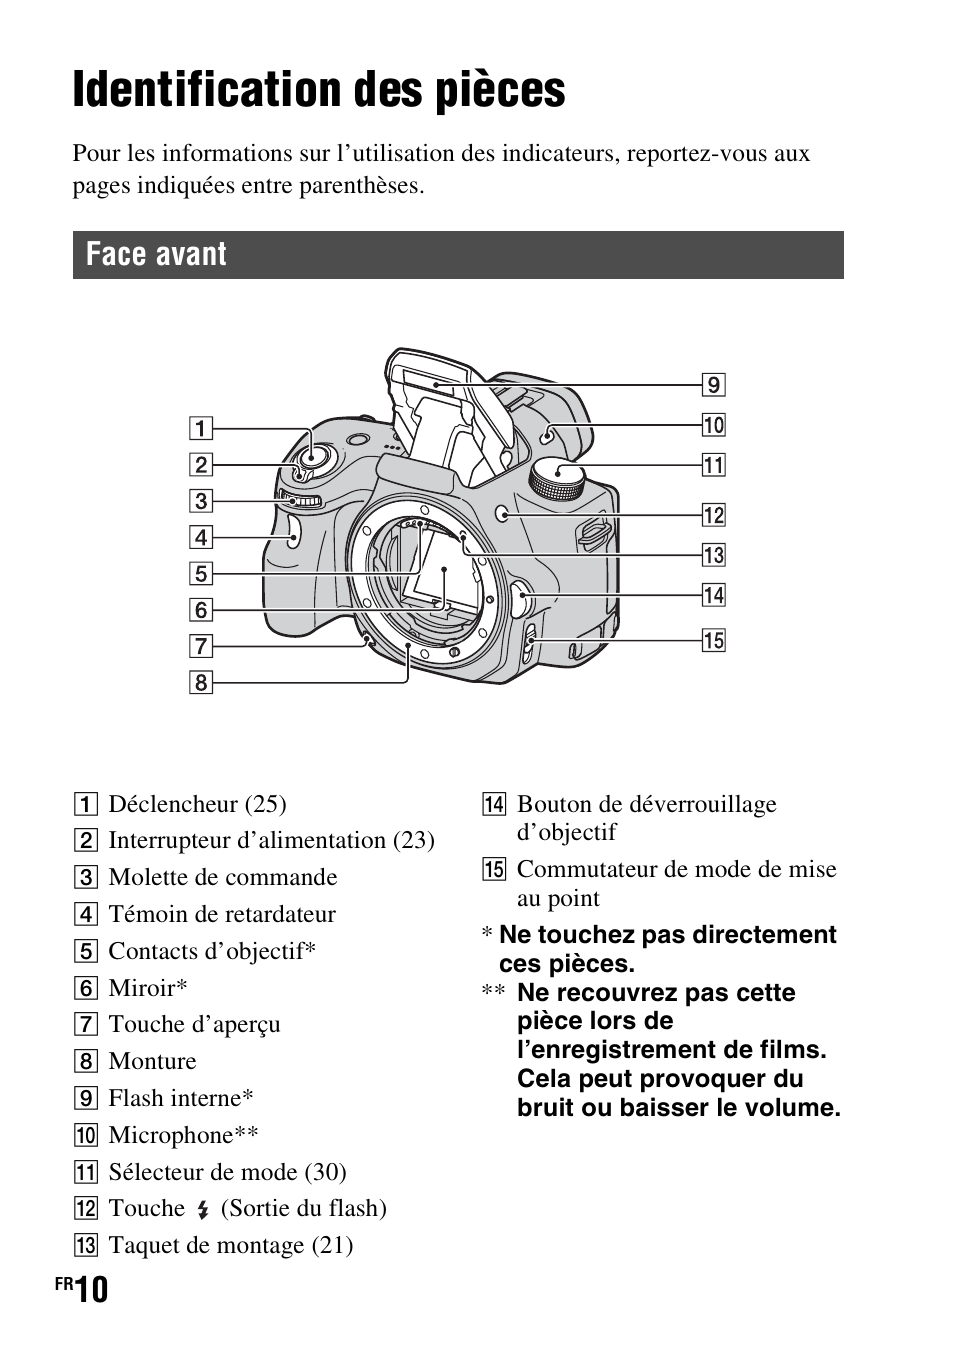 Identification des pièces, Face avant | Sony SLT-A37 User Manual | Page 62 / 507